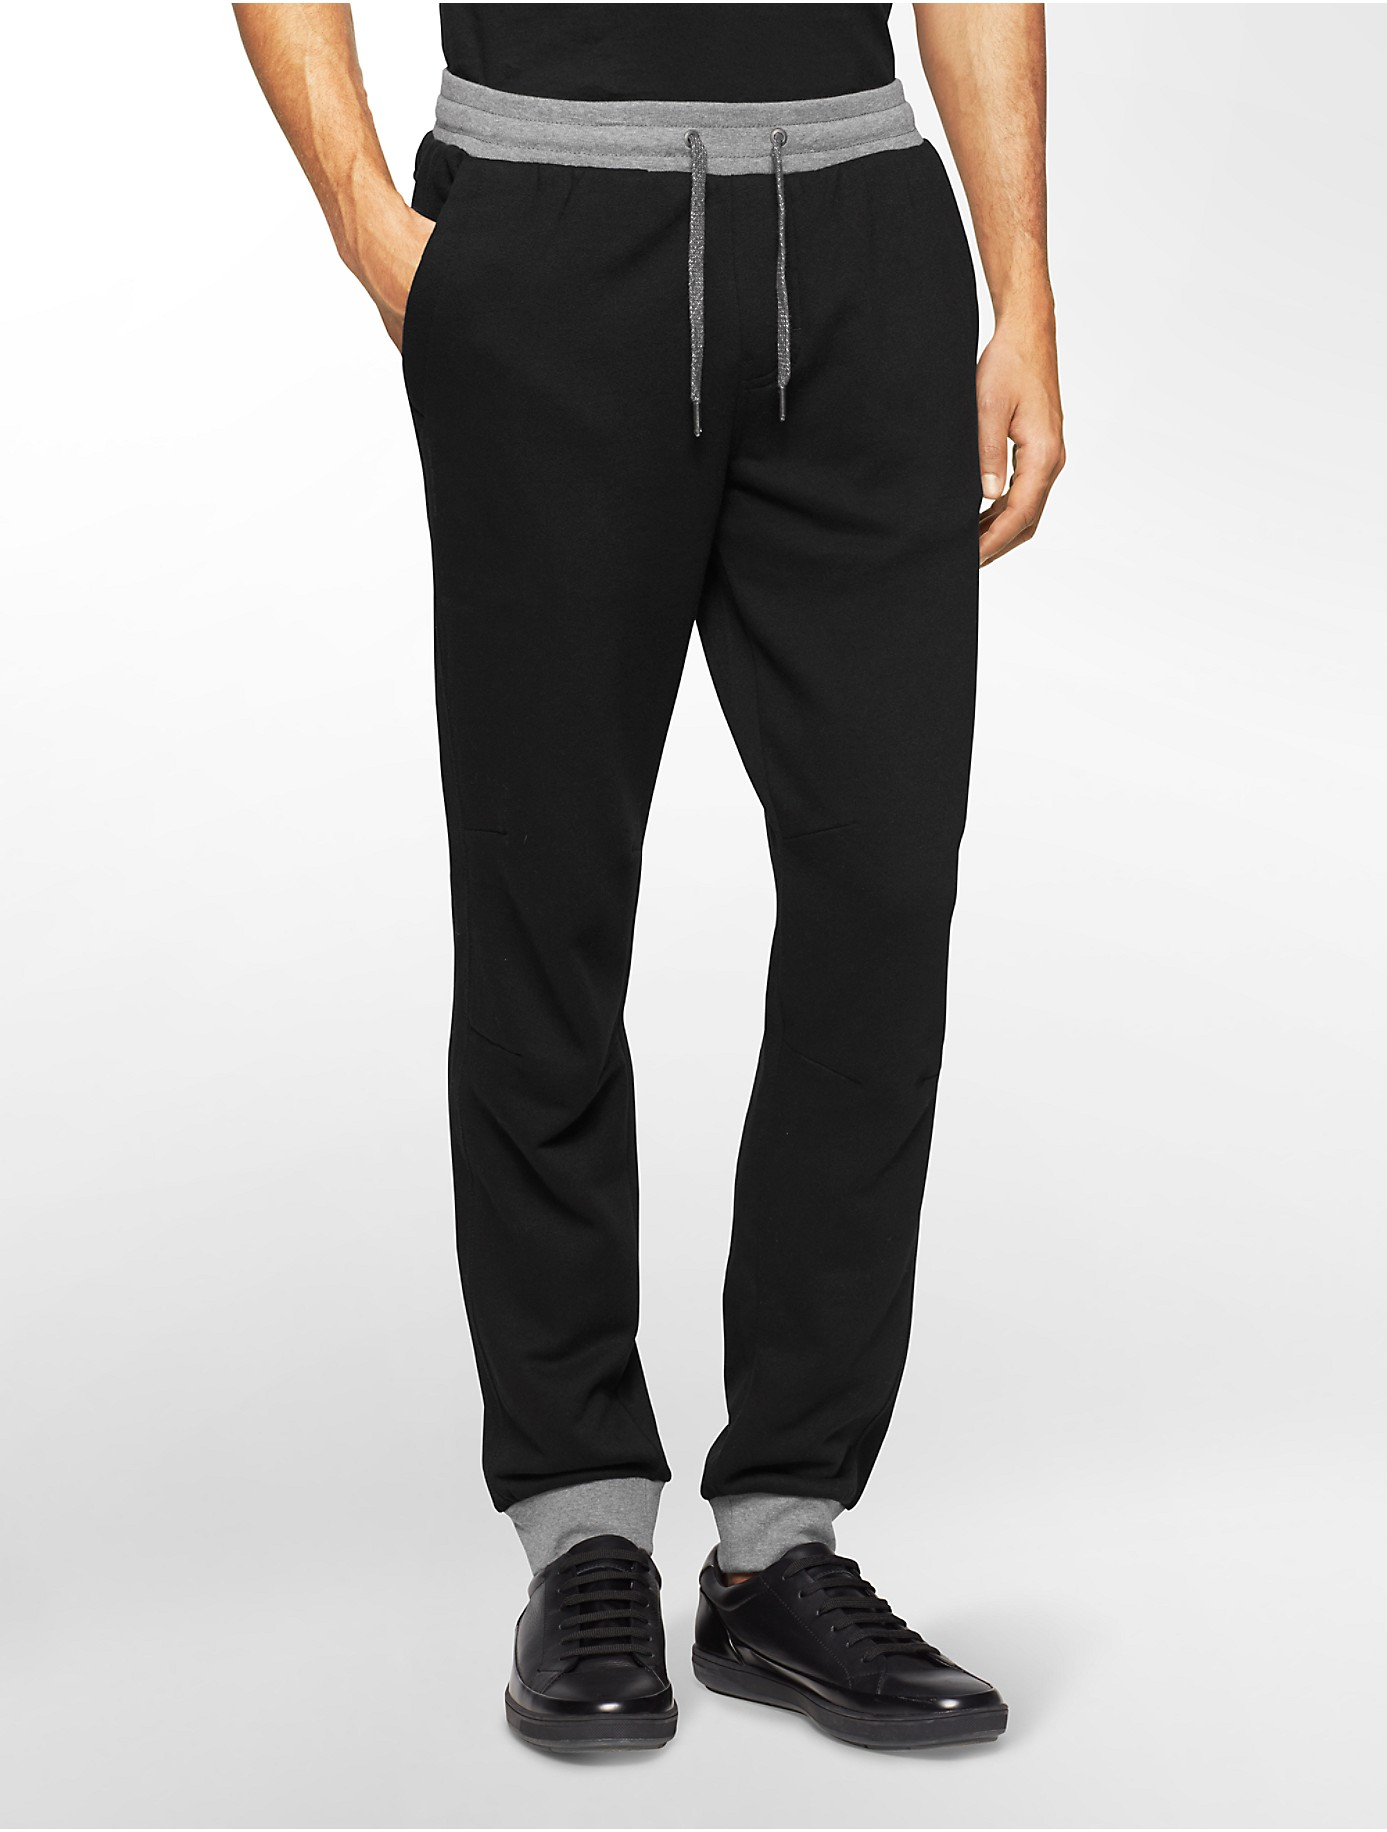 Lyst - Calvin Klein Jeans Ultra Suede Fleece Jogger Pants in Black for Men